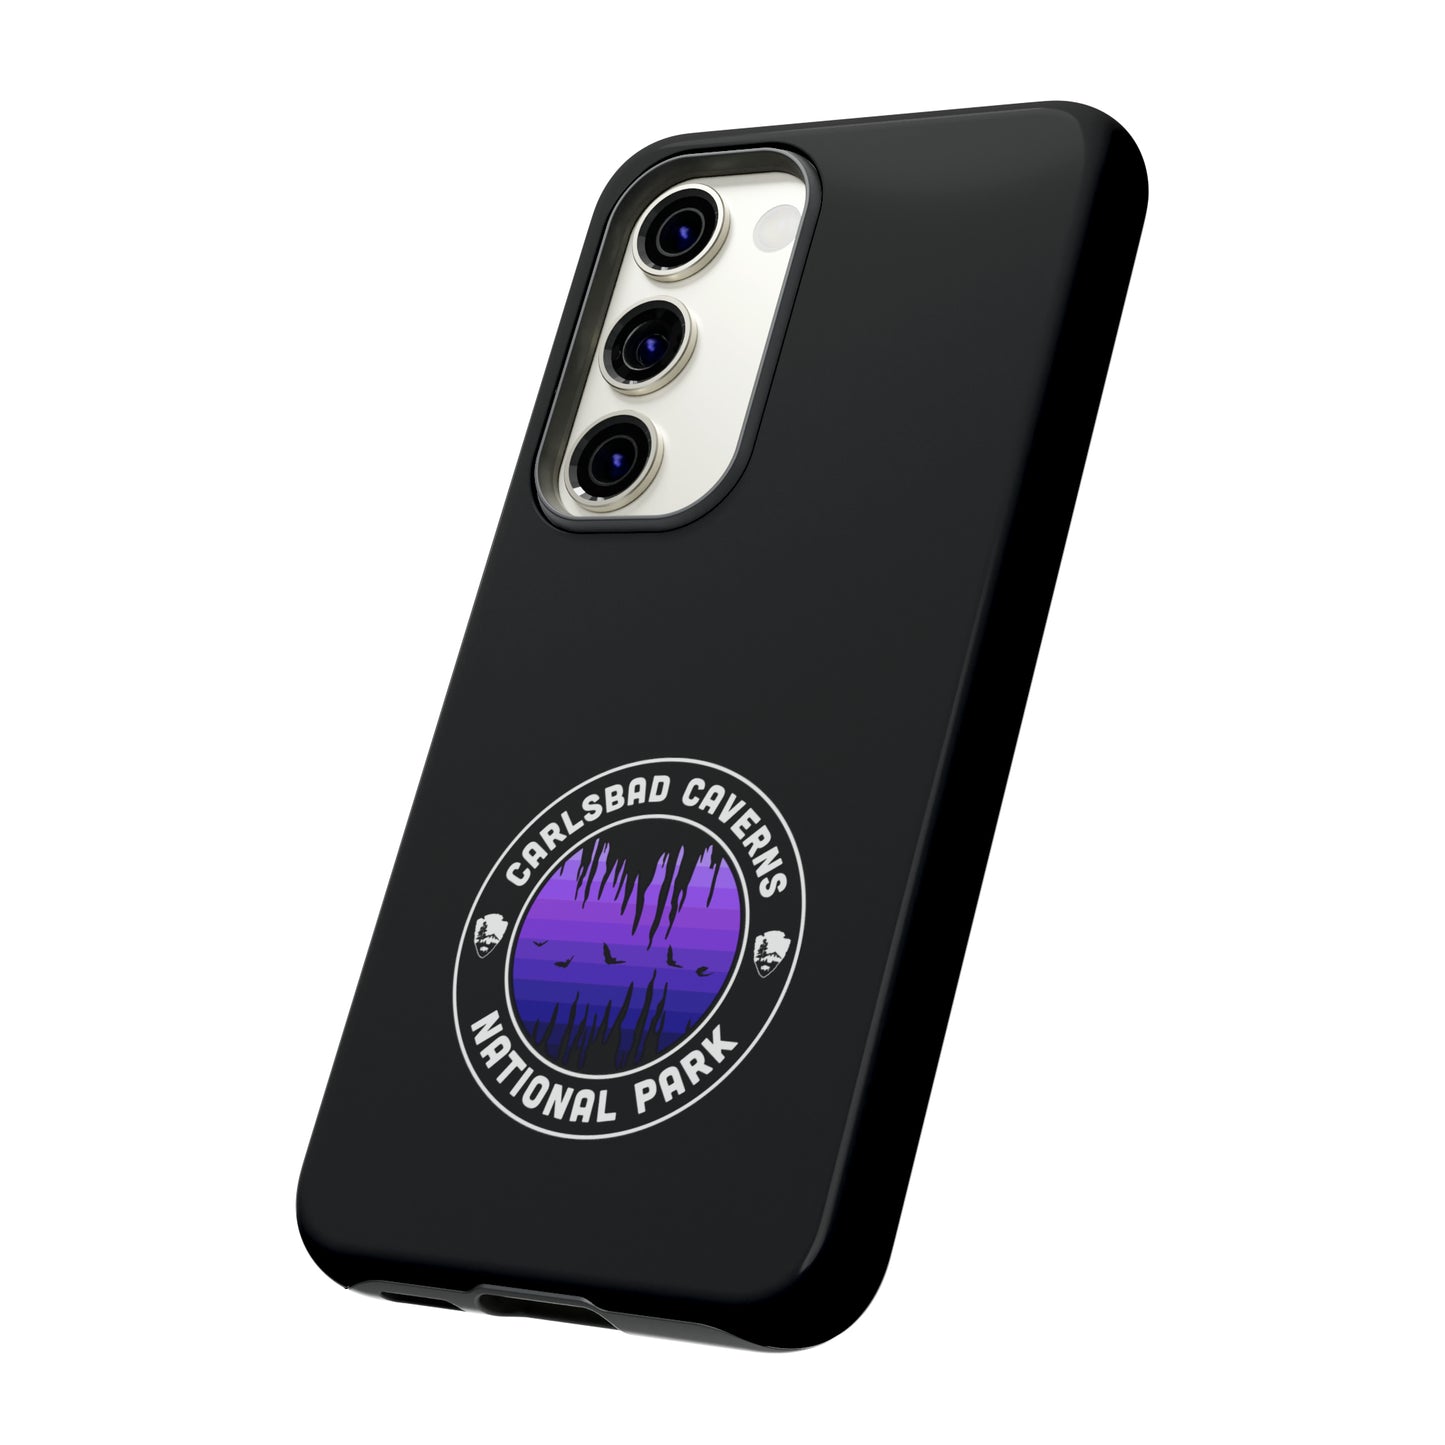 Carlsbad Caverns National Park Phone Case - Round Emblem Design